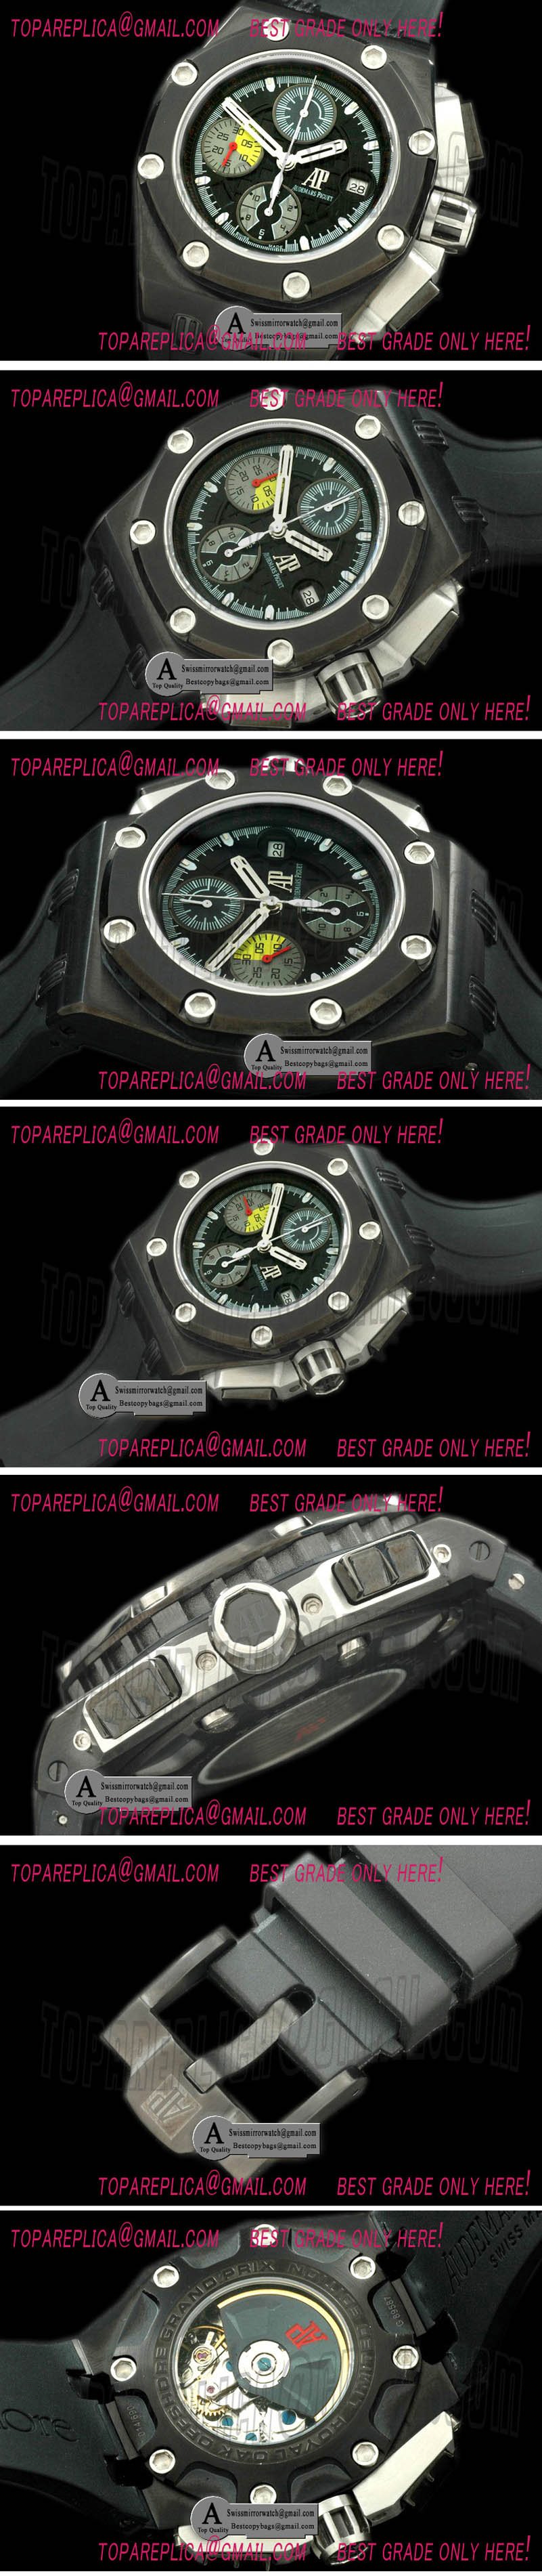 Audemars Piguet Grand Prix Limited Edition PVD/Rubber Black A-7750 Replica Watches